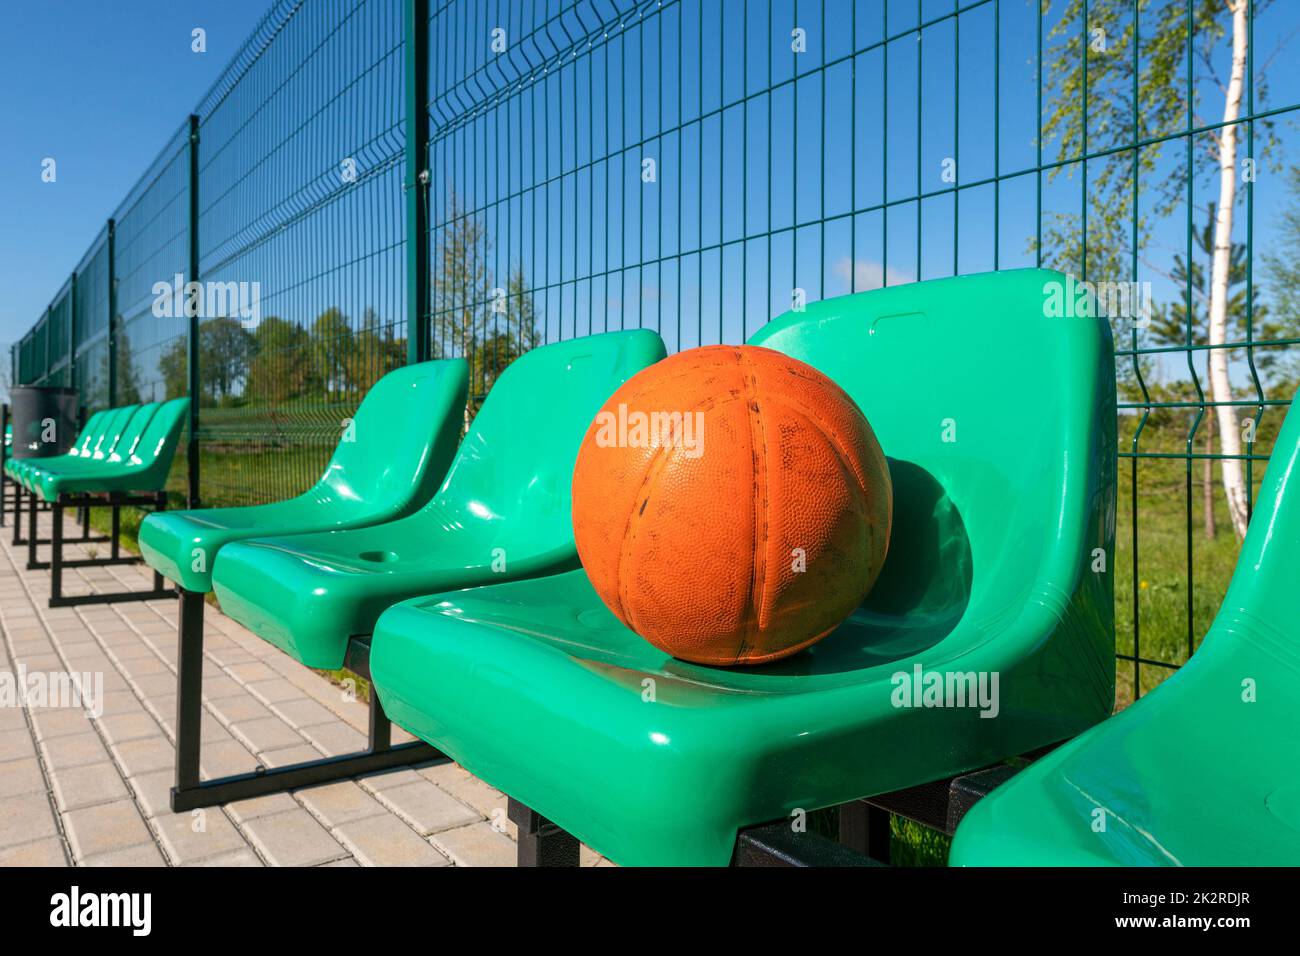 Basketball ball on a plastic seat Stock Photo